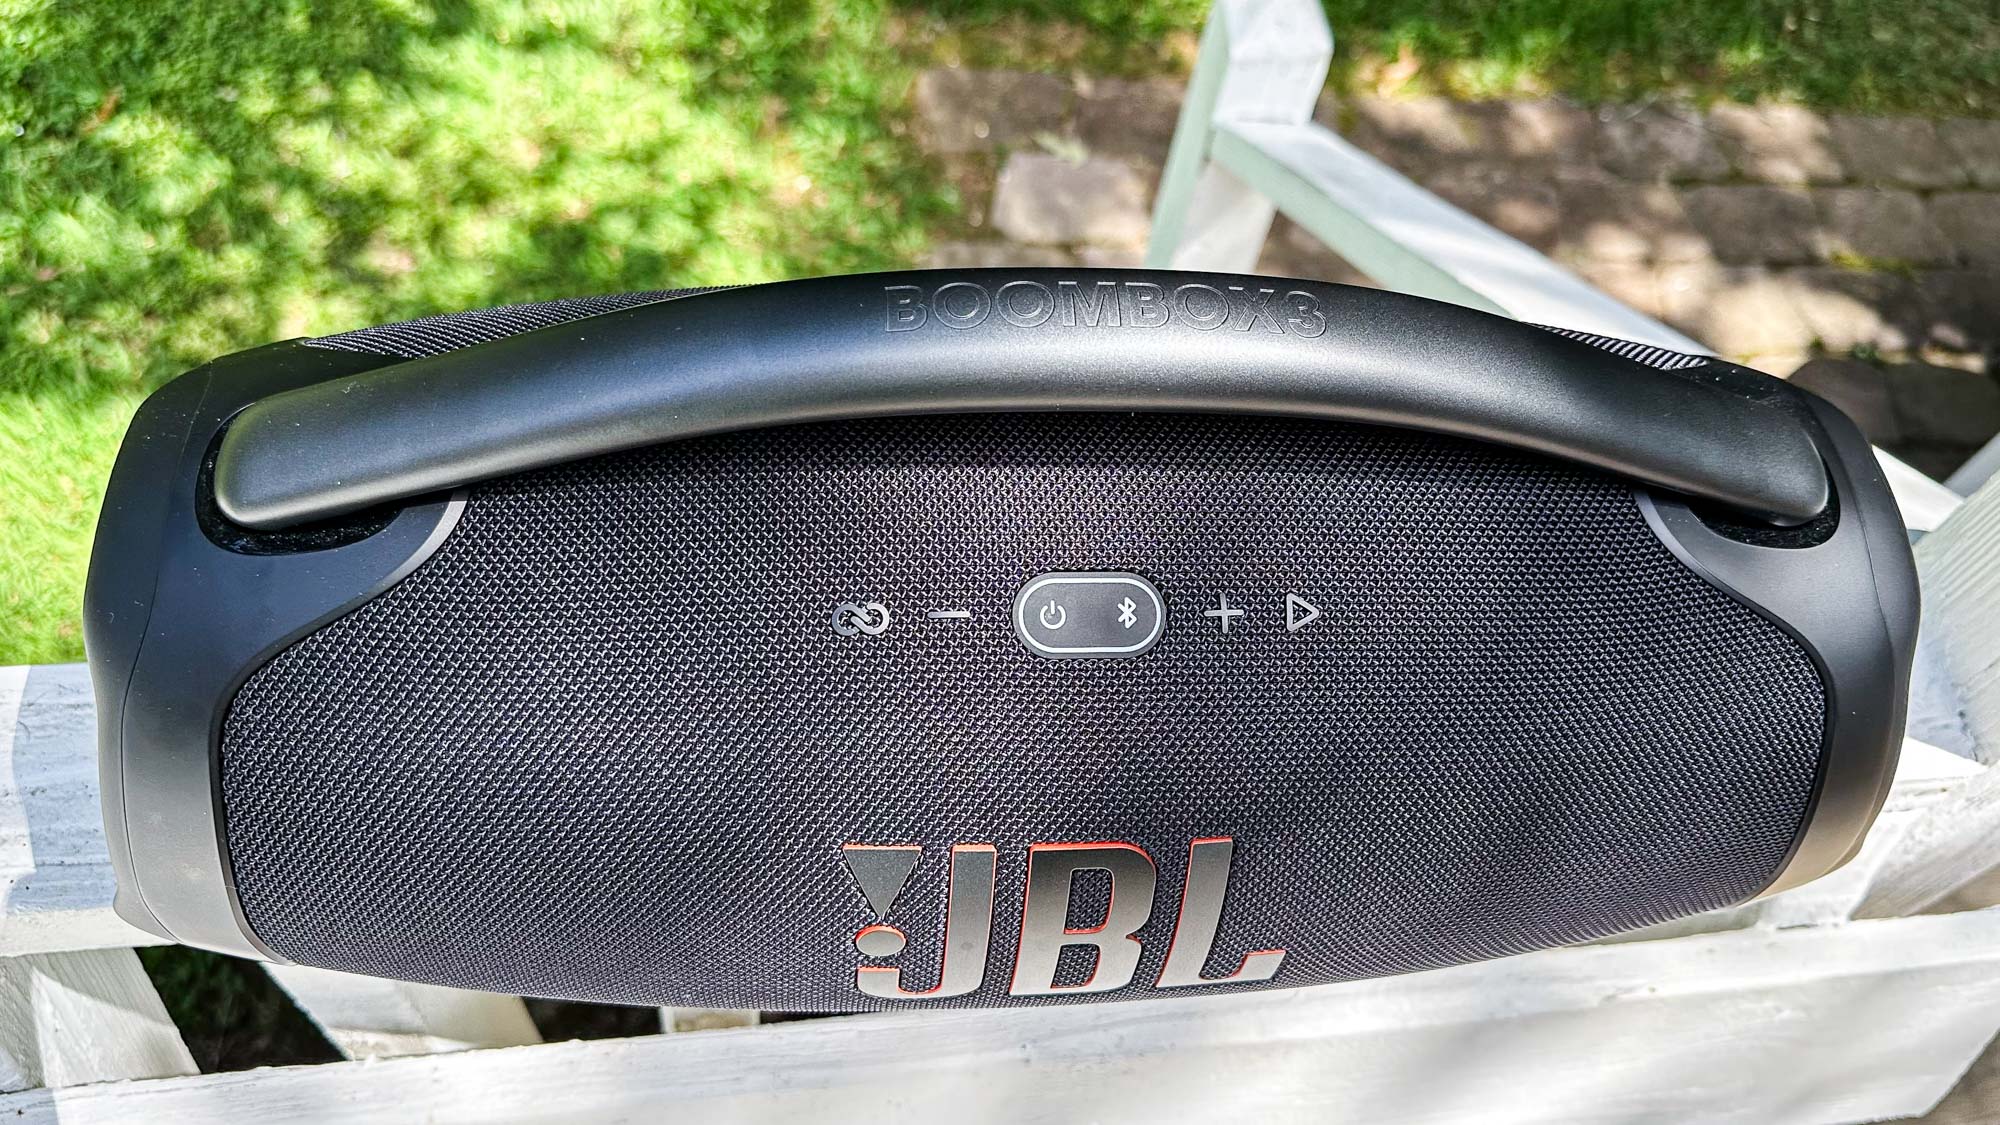 JBL Boombox 3 Review – JBL's Loudest Boombox